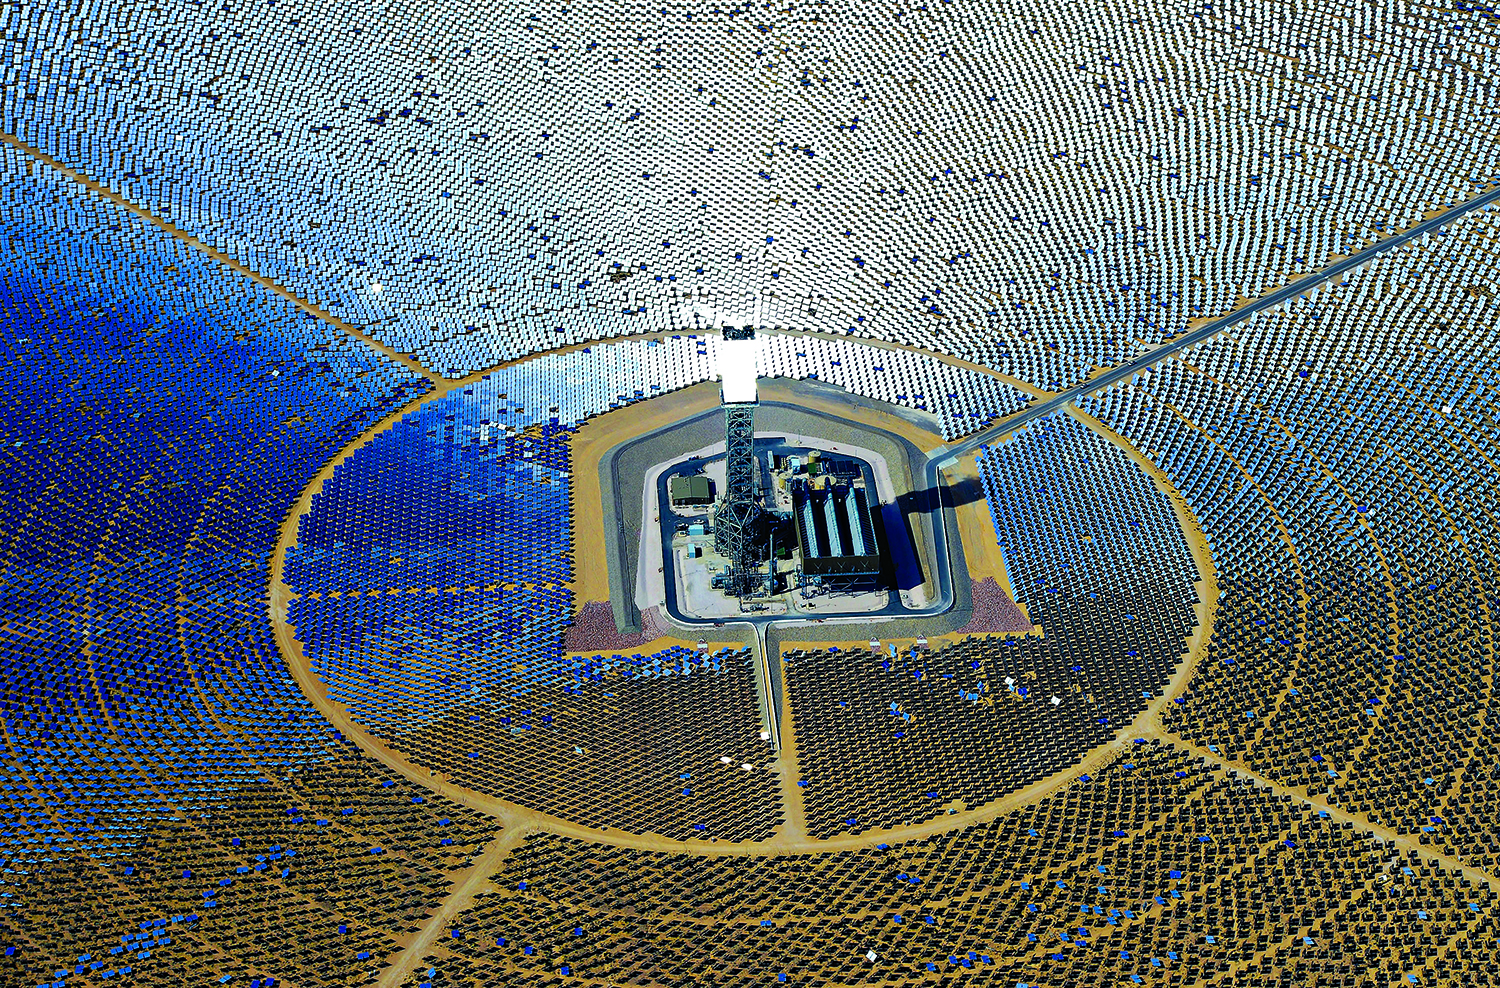 The World’s Largest Solar Farm